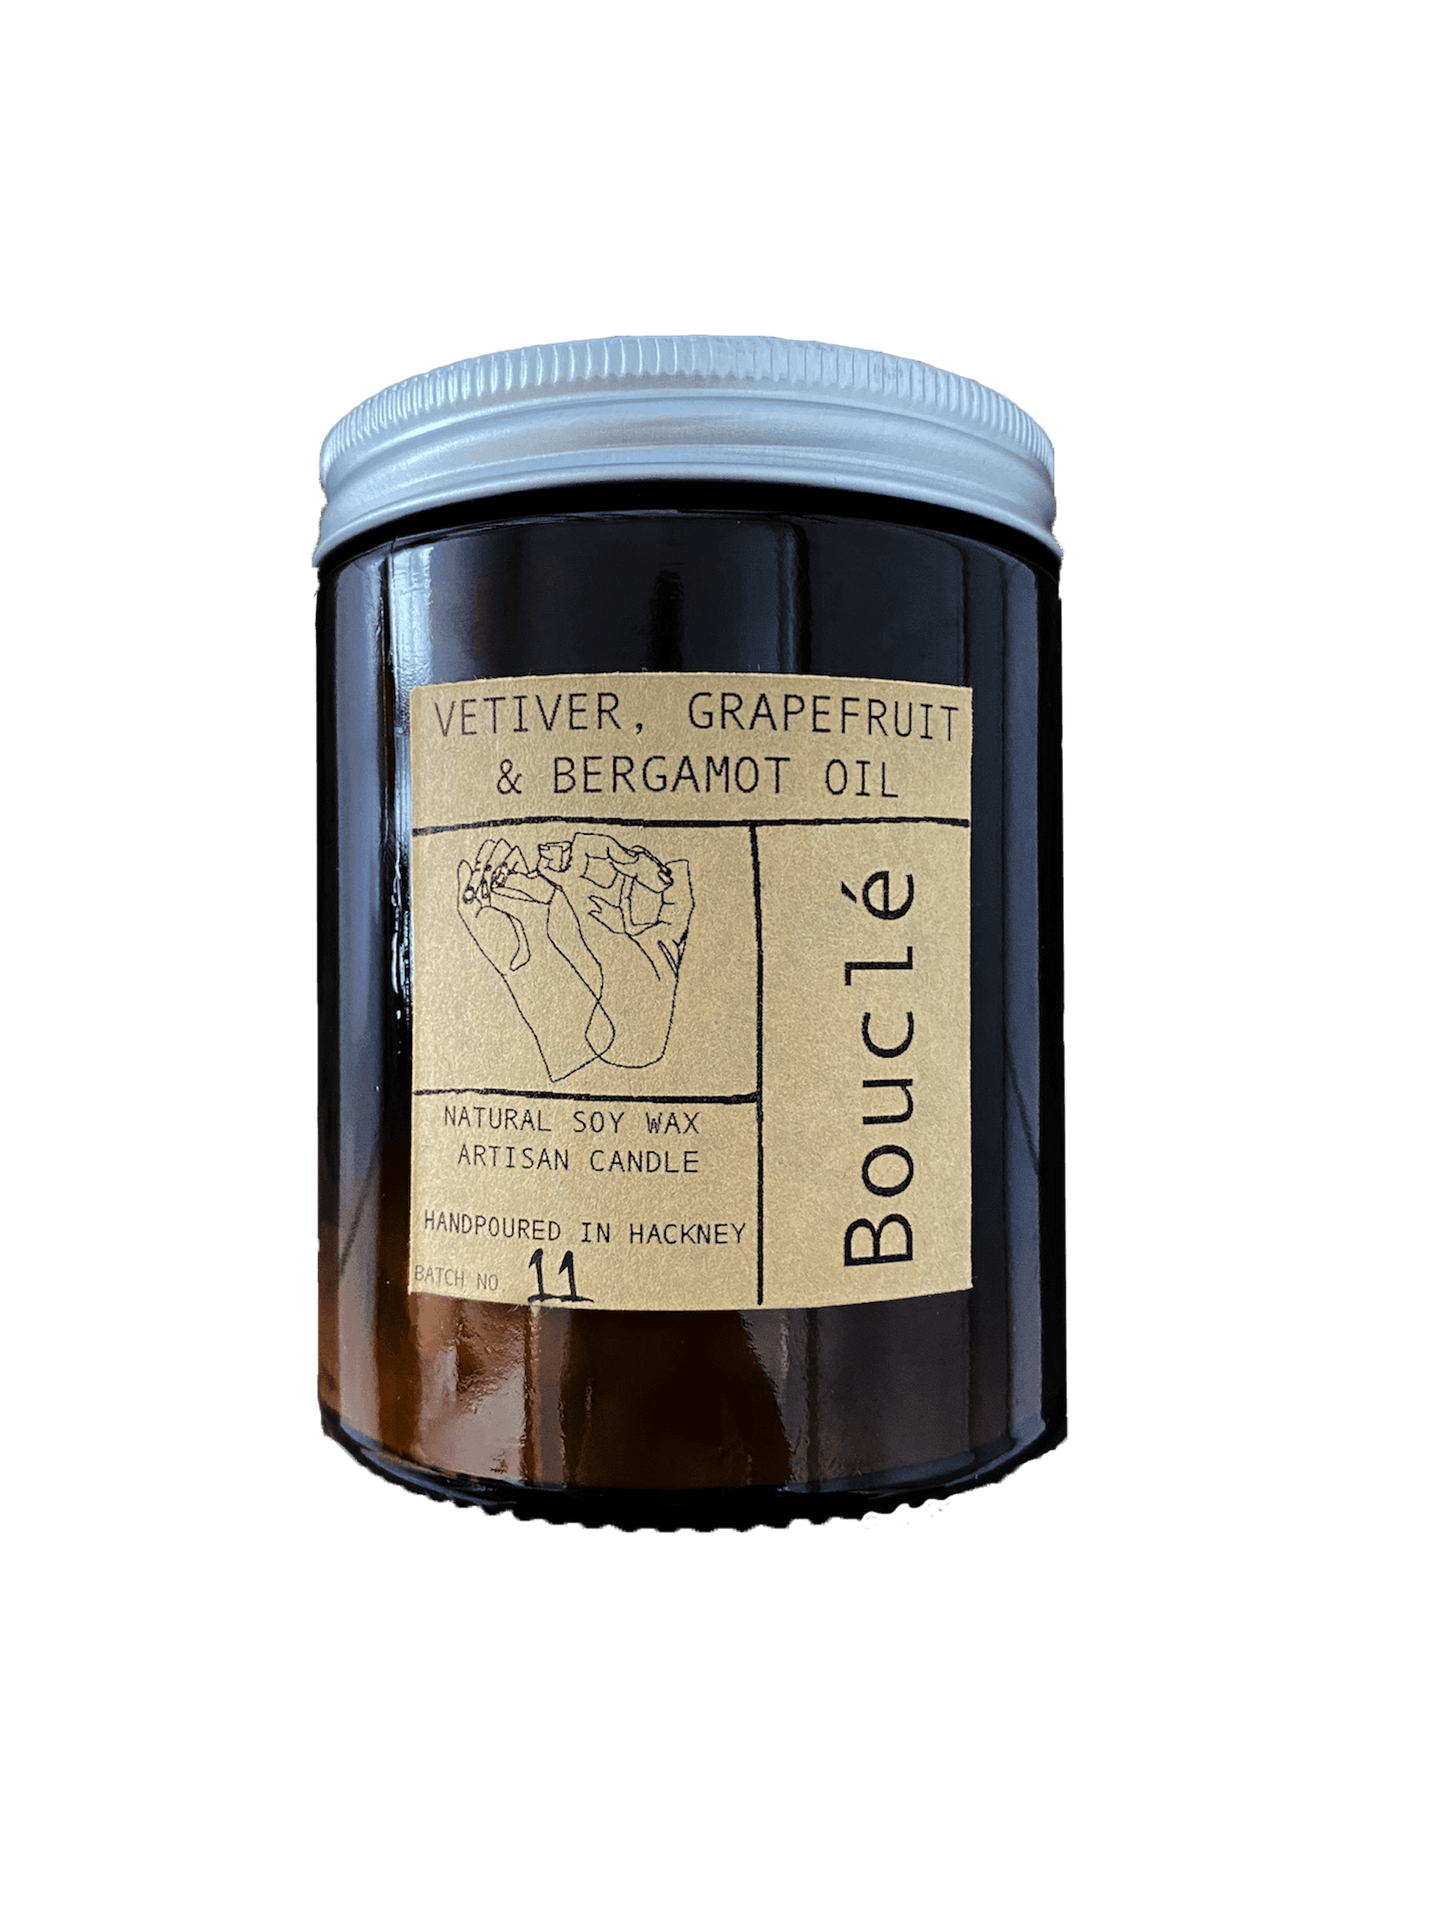 Bouclé Candle Vitiver, Grapefruit & Bergamot Oil Candle